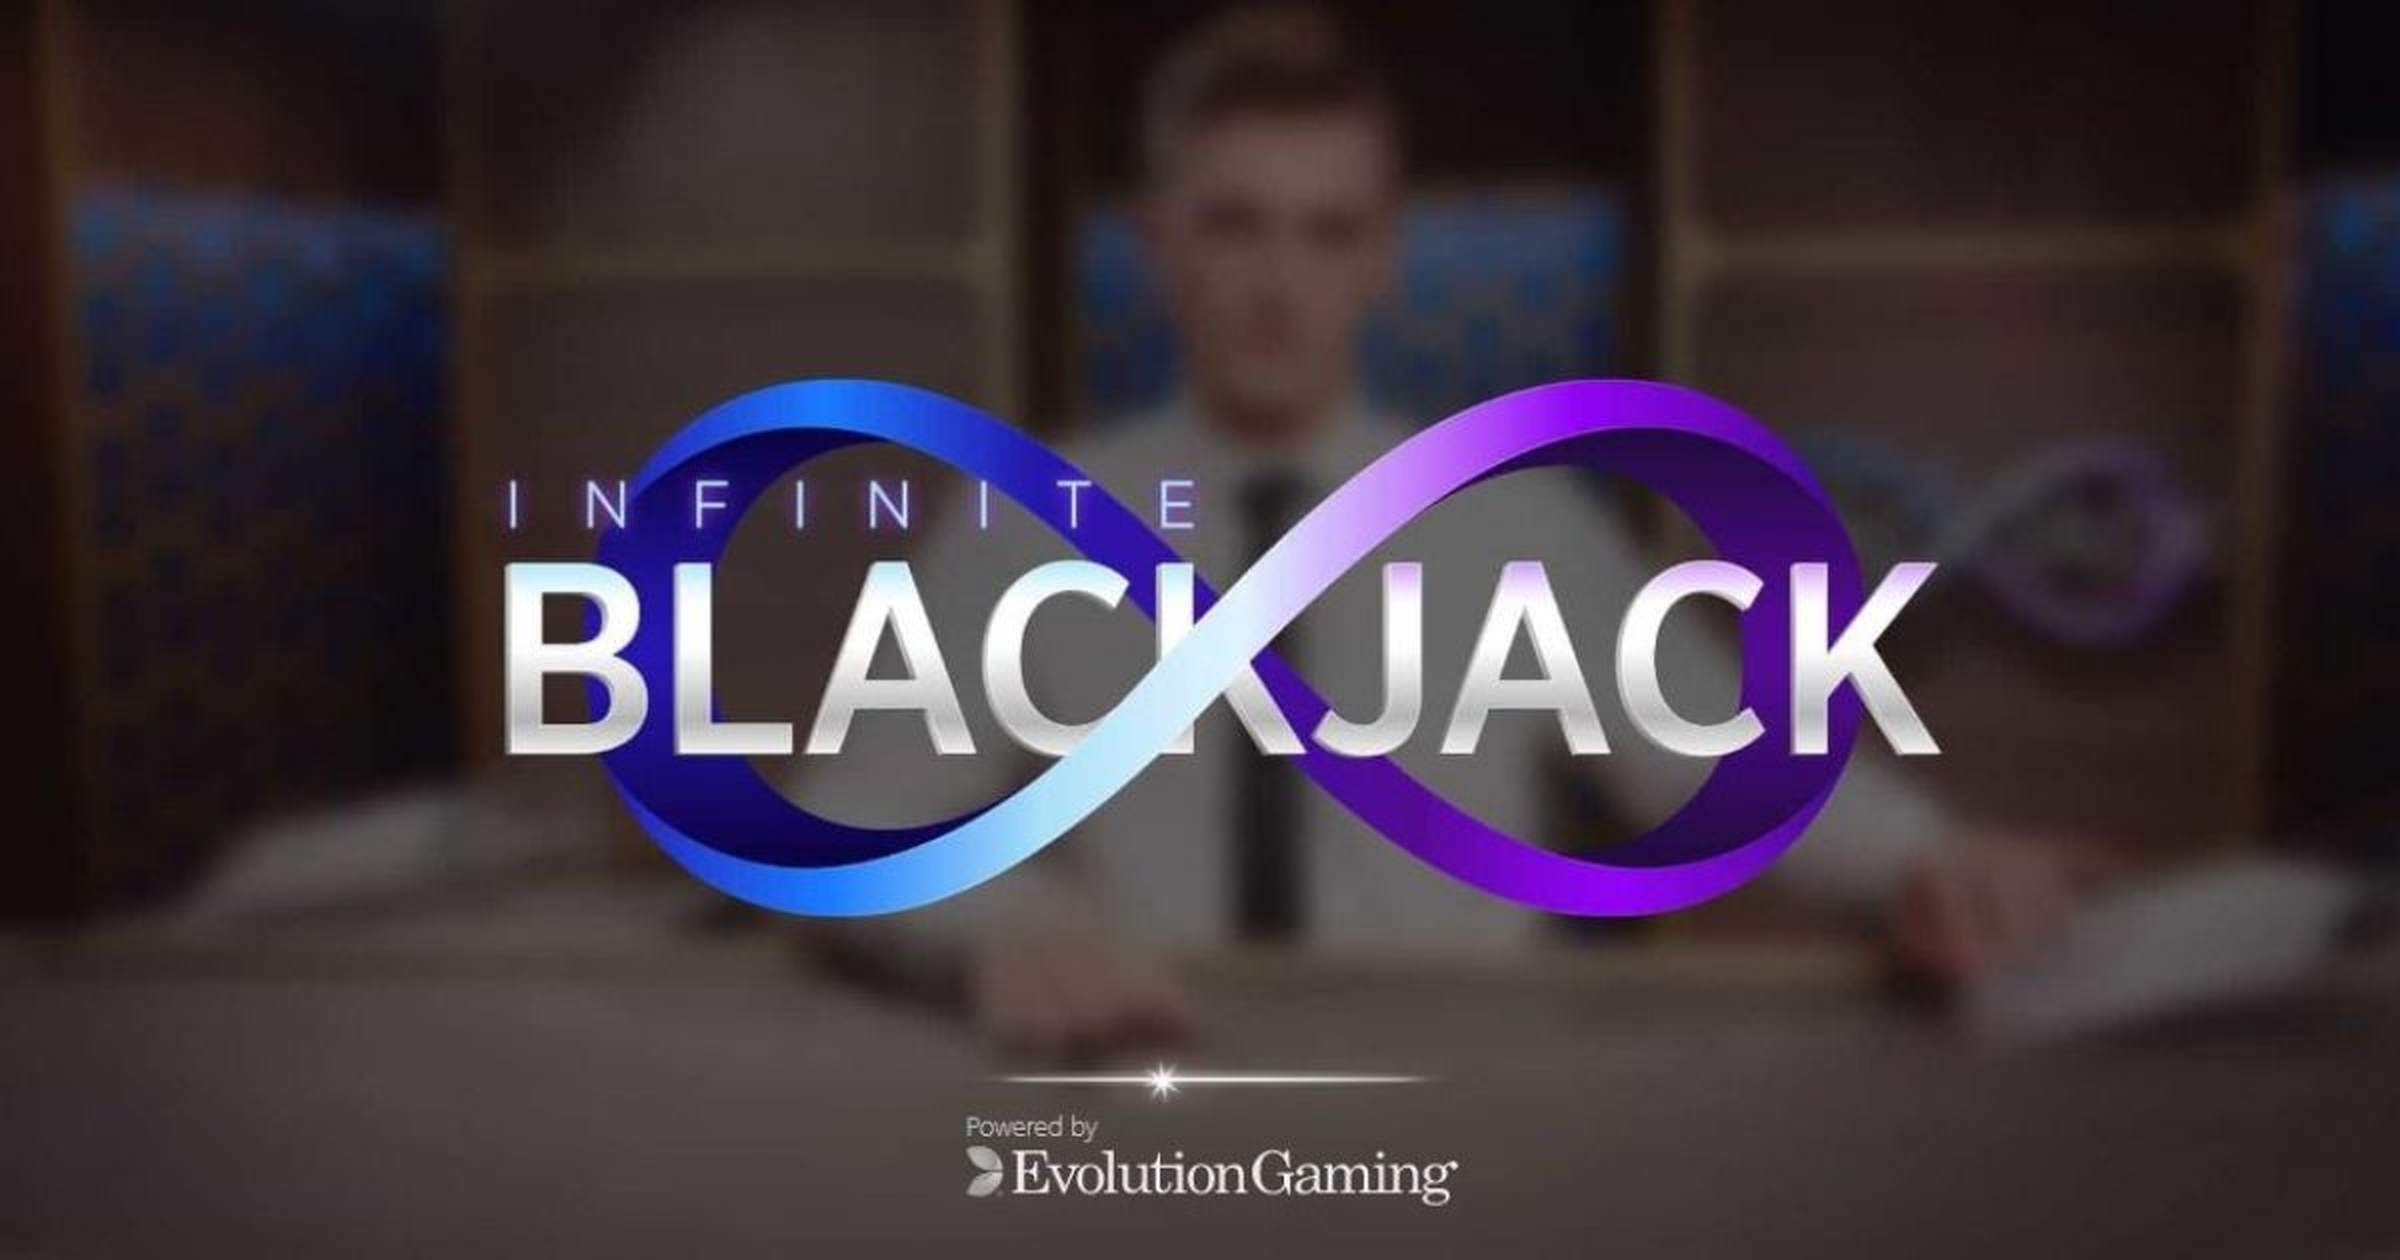 Infinite Blackjack demo